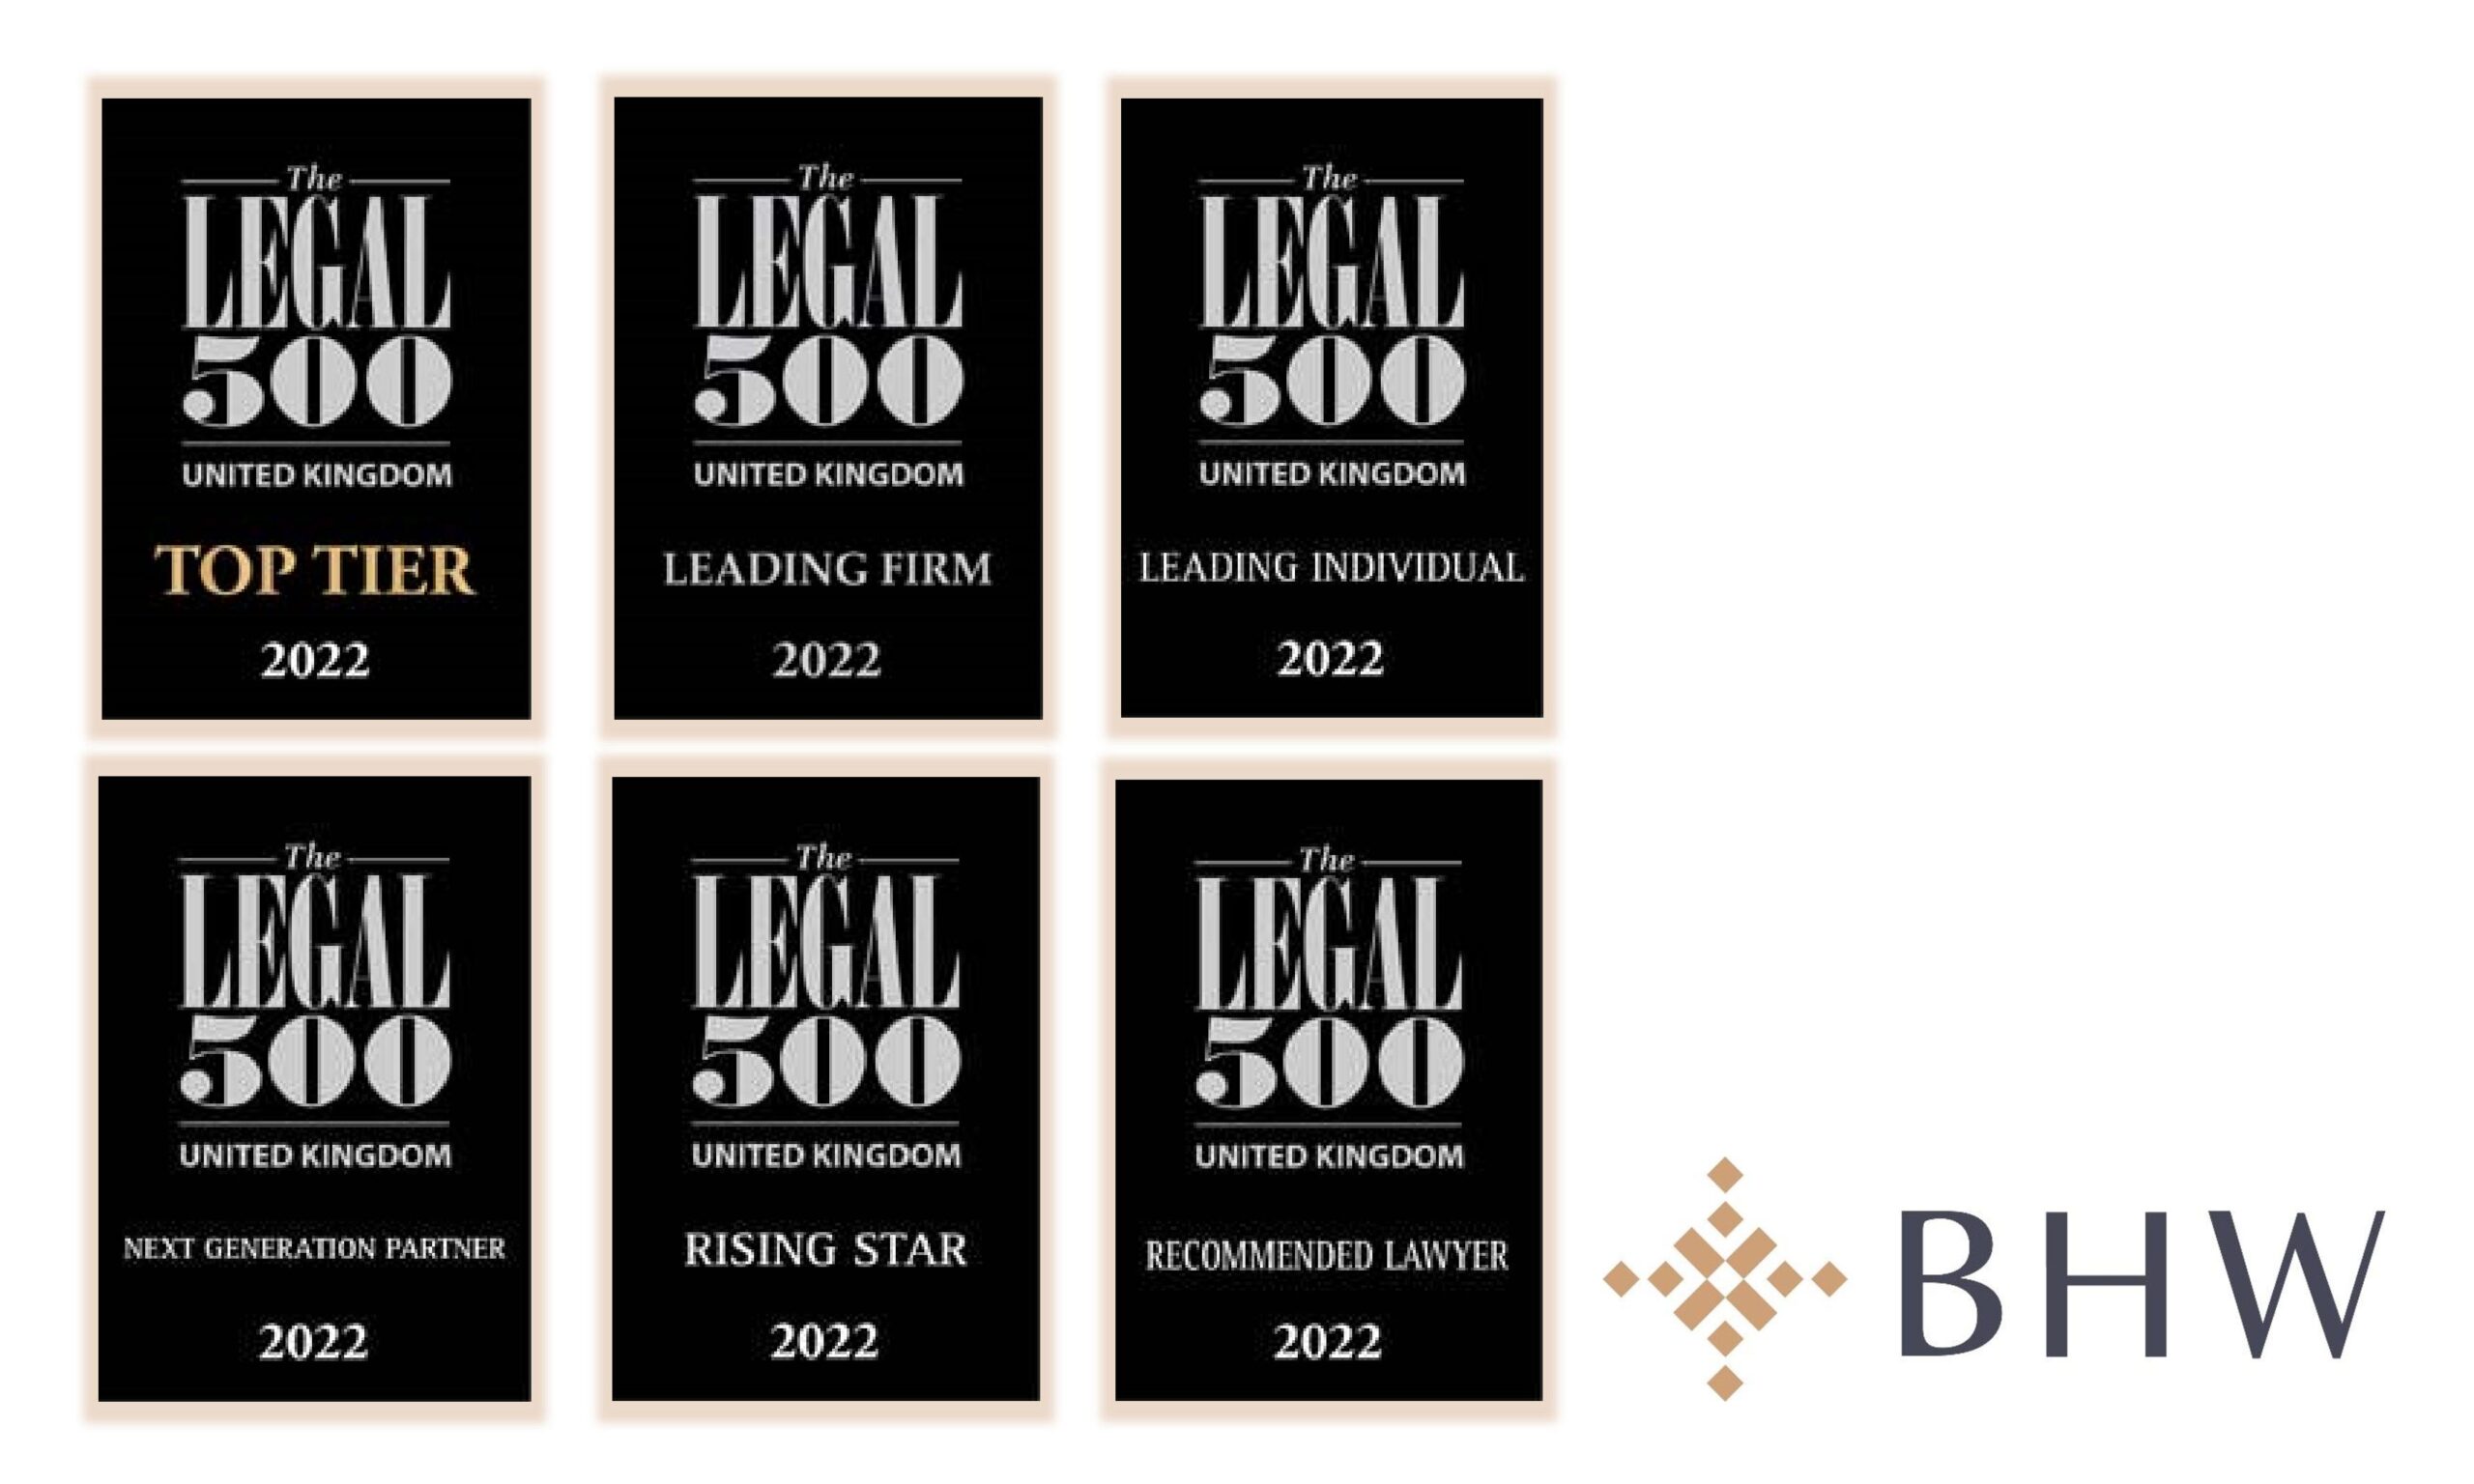 Legal 500 2022 rankings